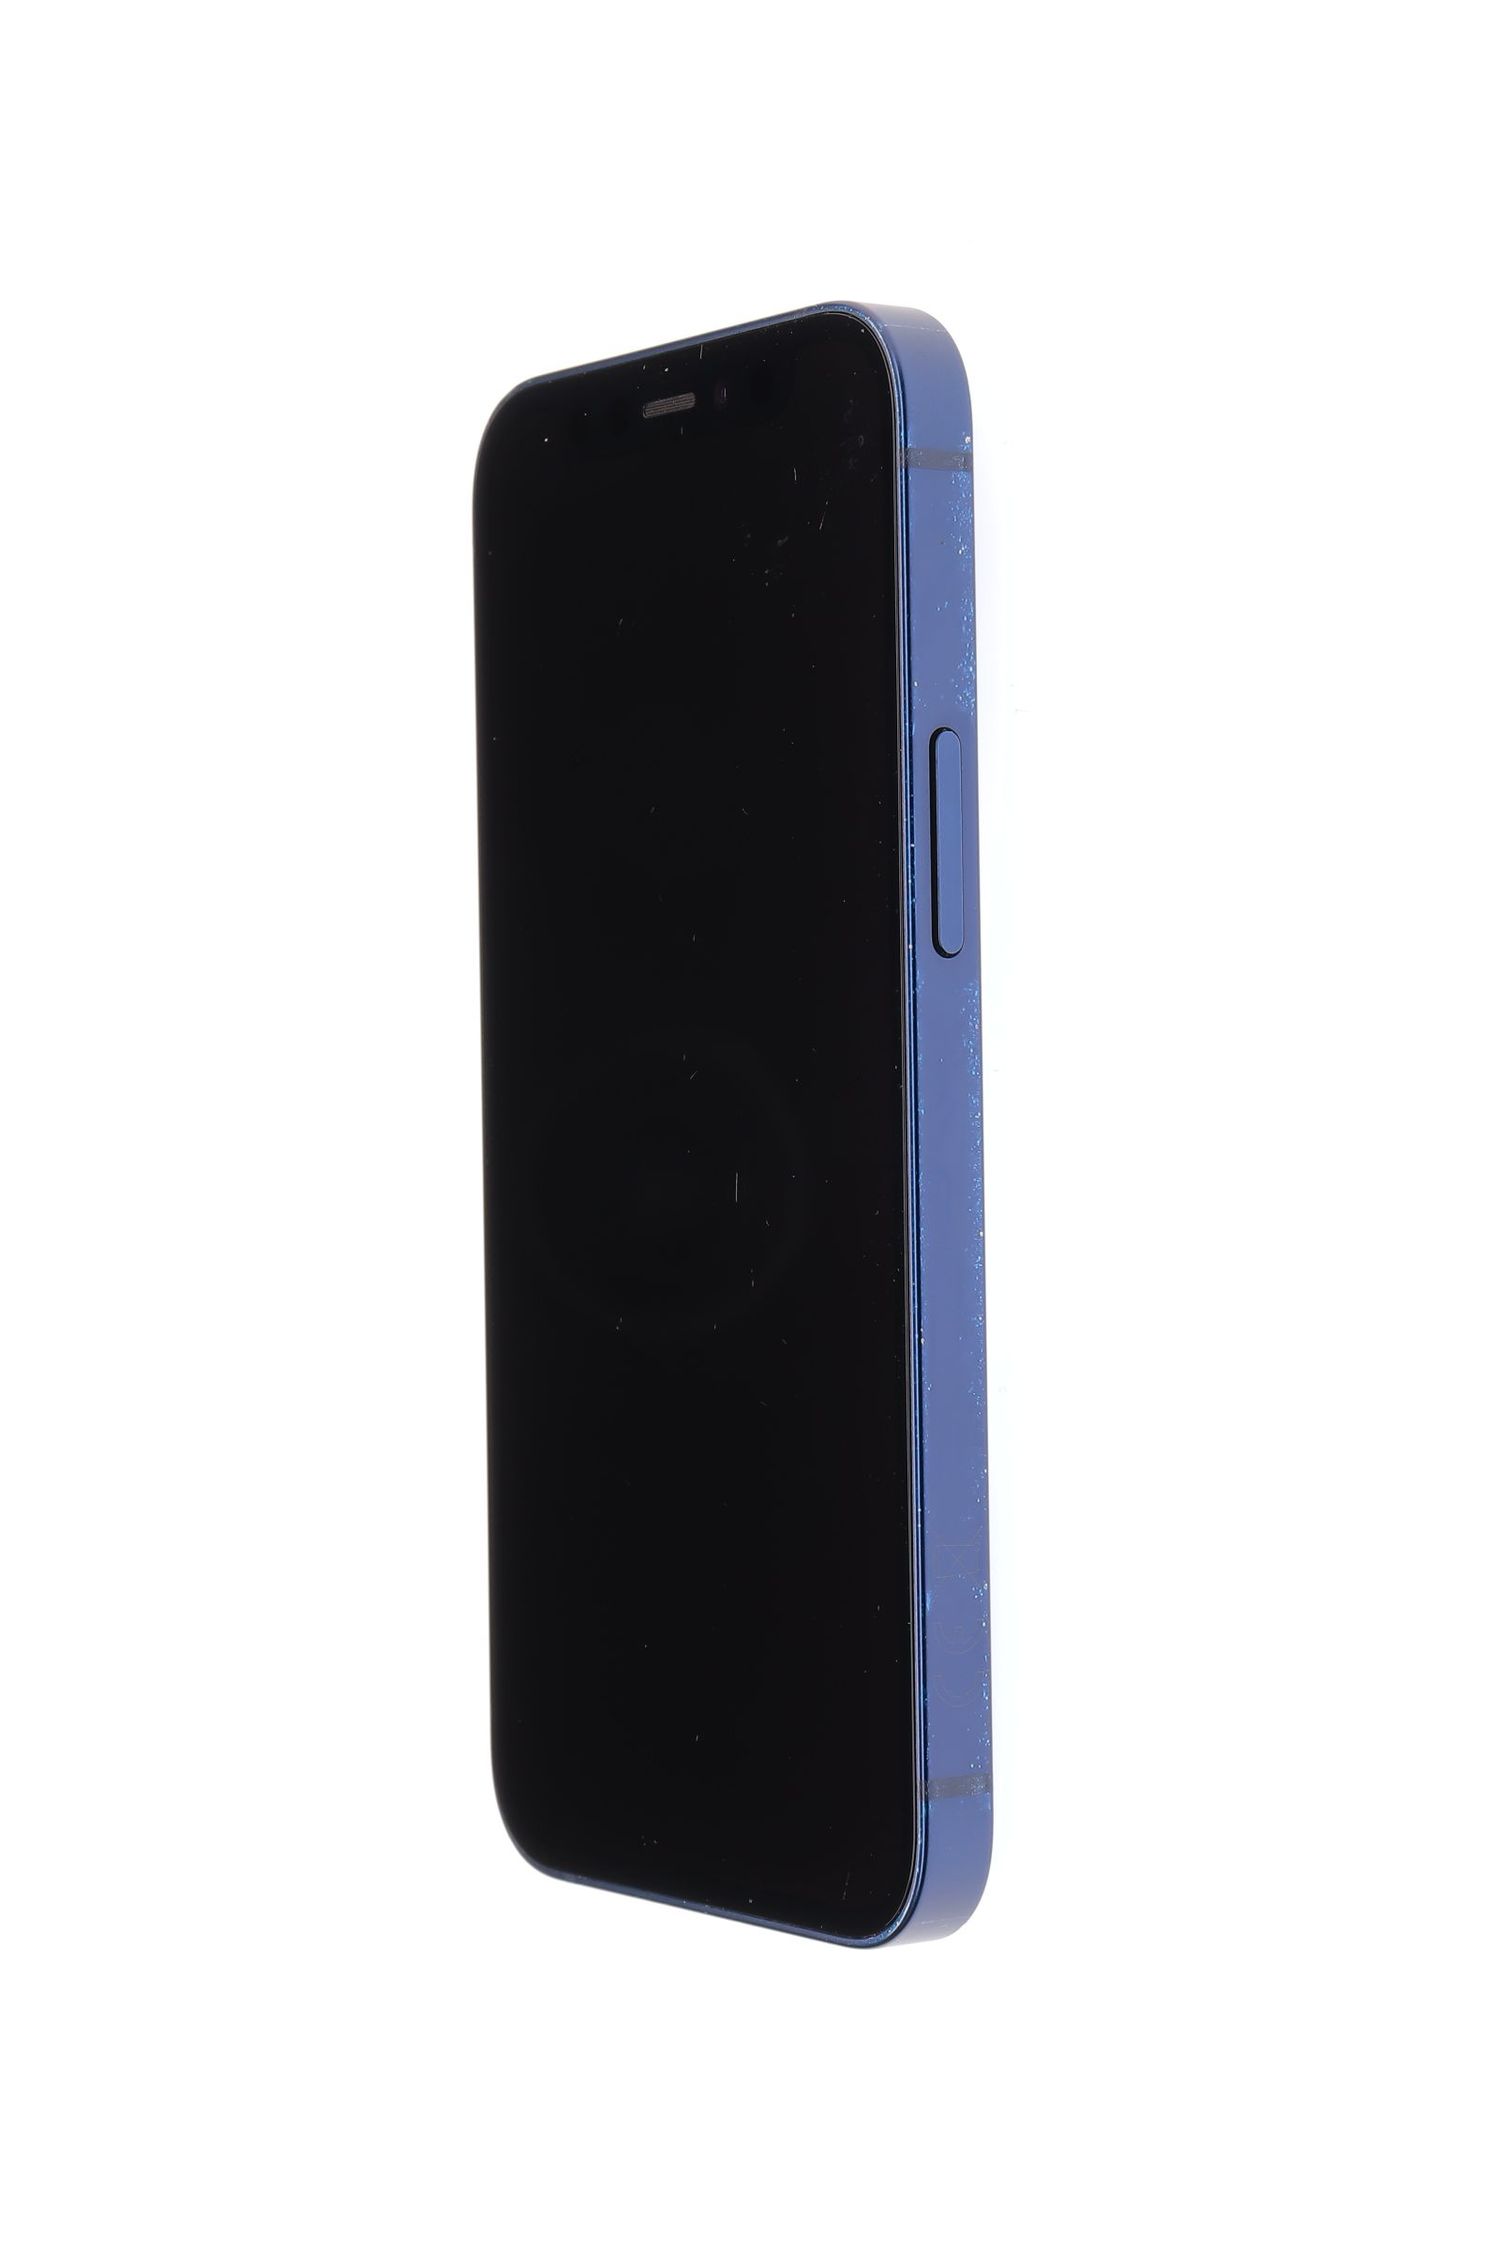 Telefon mobil Apple iPhone 12 mini, Blue, 64 GB, Foarte Bun